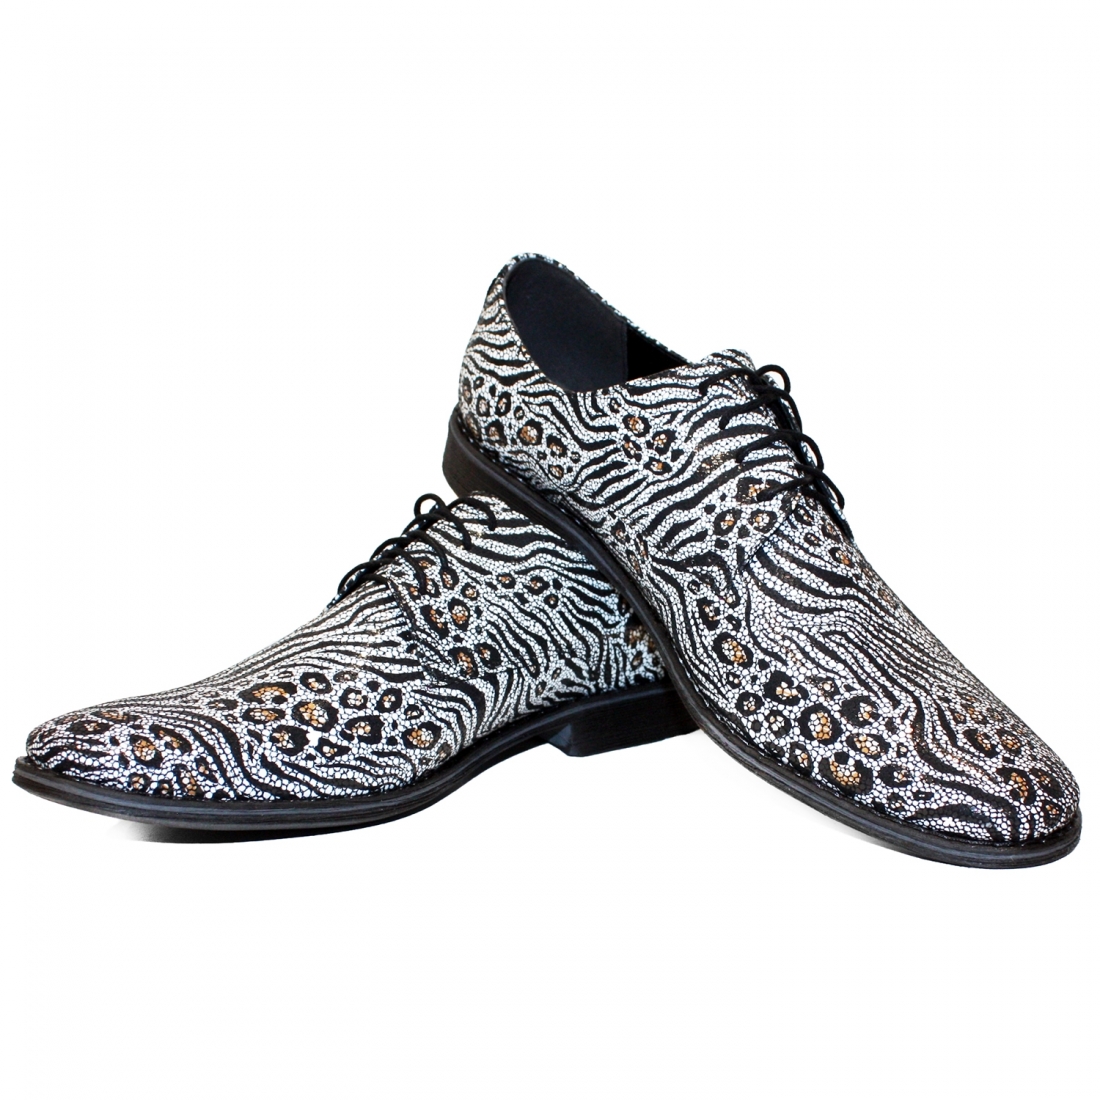 Modello Zeberro - Classic Shoes - Handmade Colorful Italian Leather Shoes